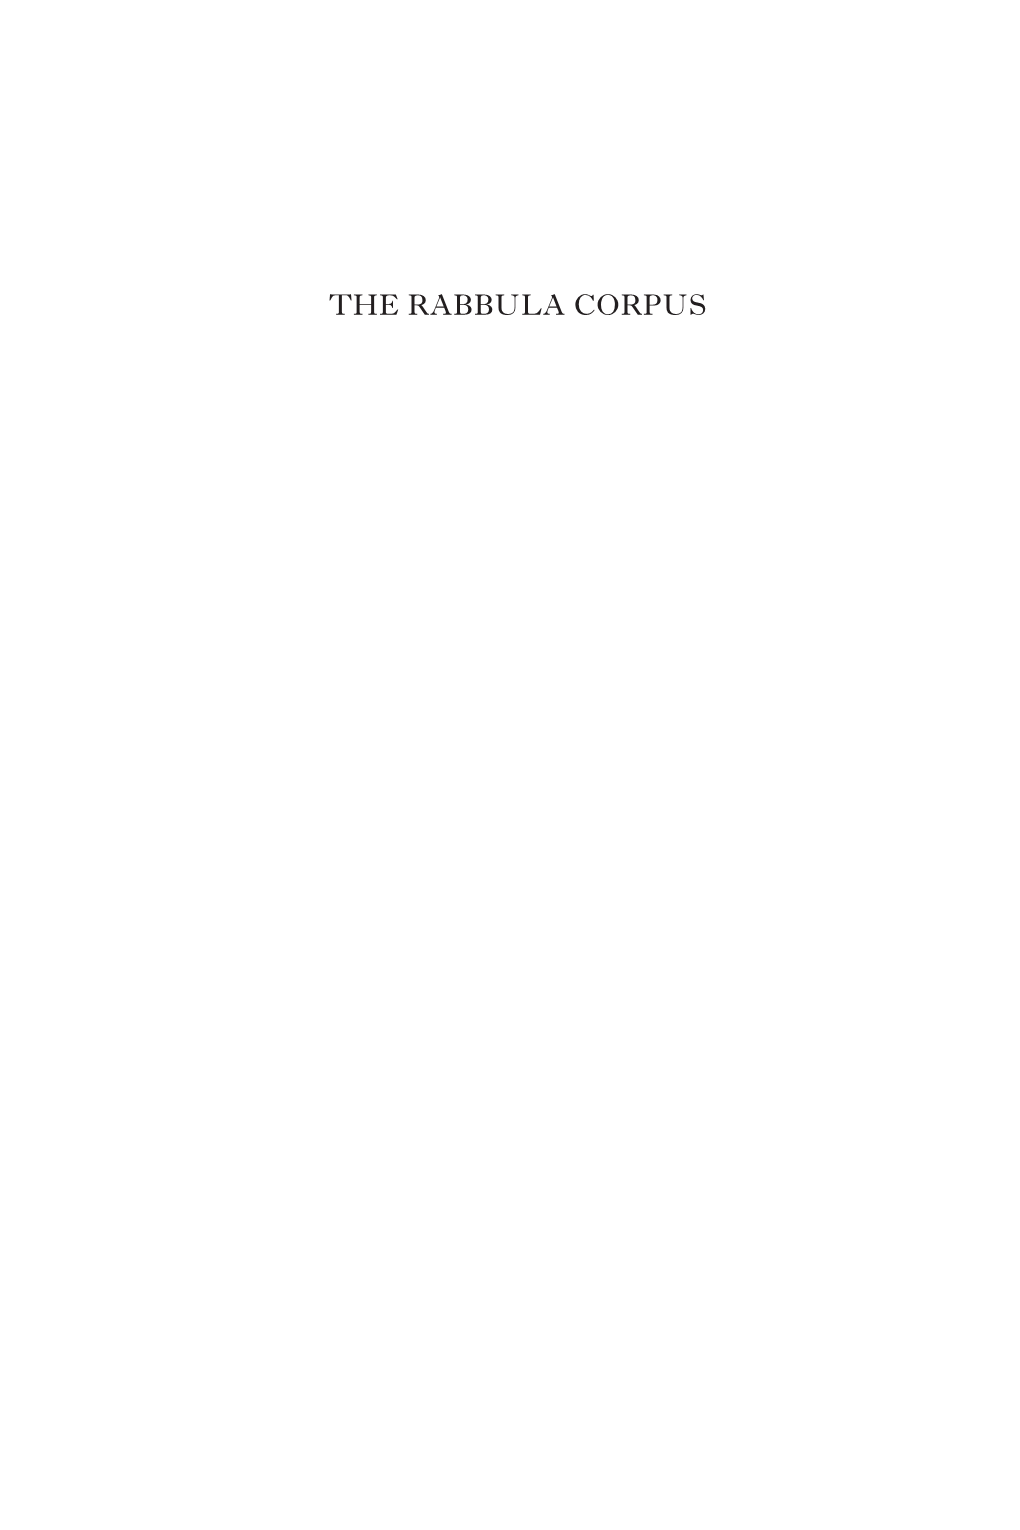 THE RABBULA CORPUS WRITINGS from the GRECO-ROMAN WORLD General Editors